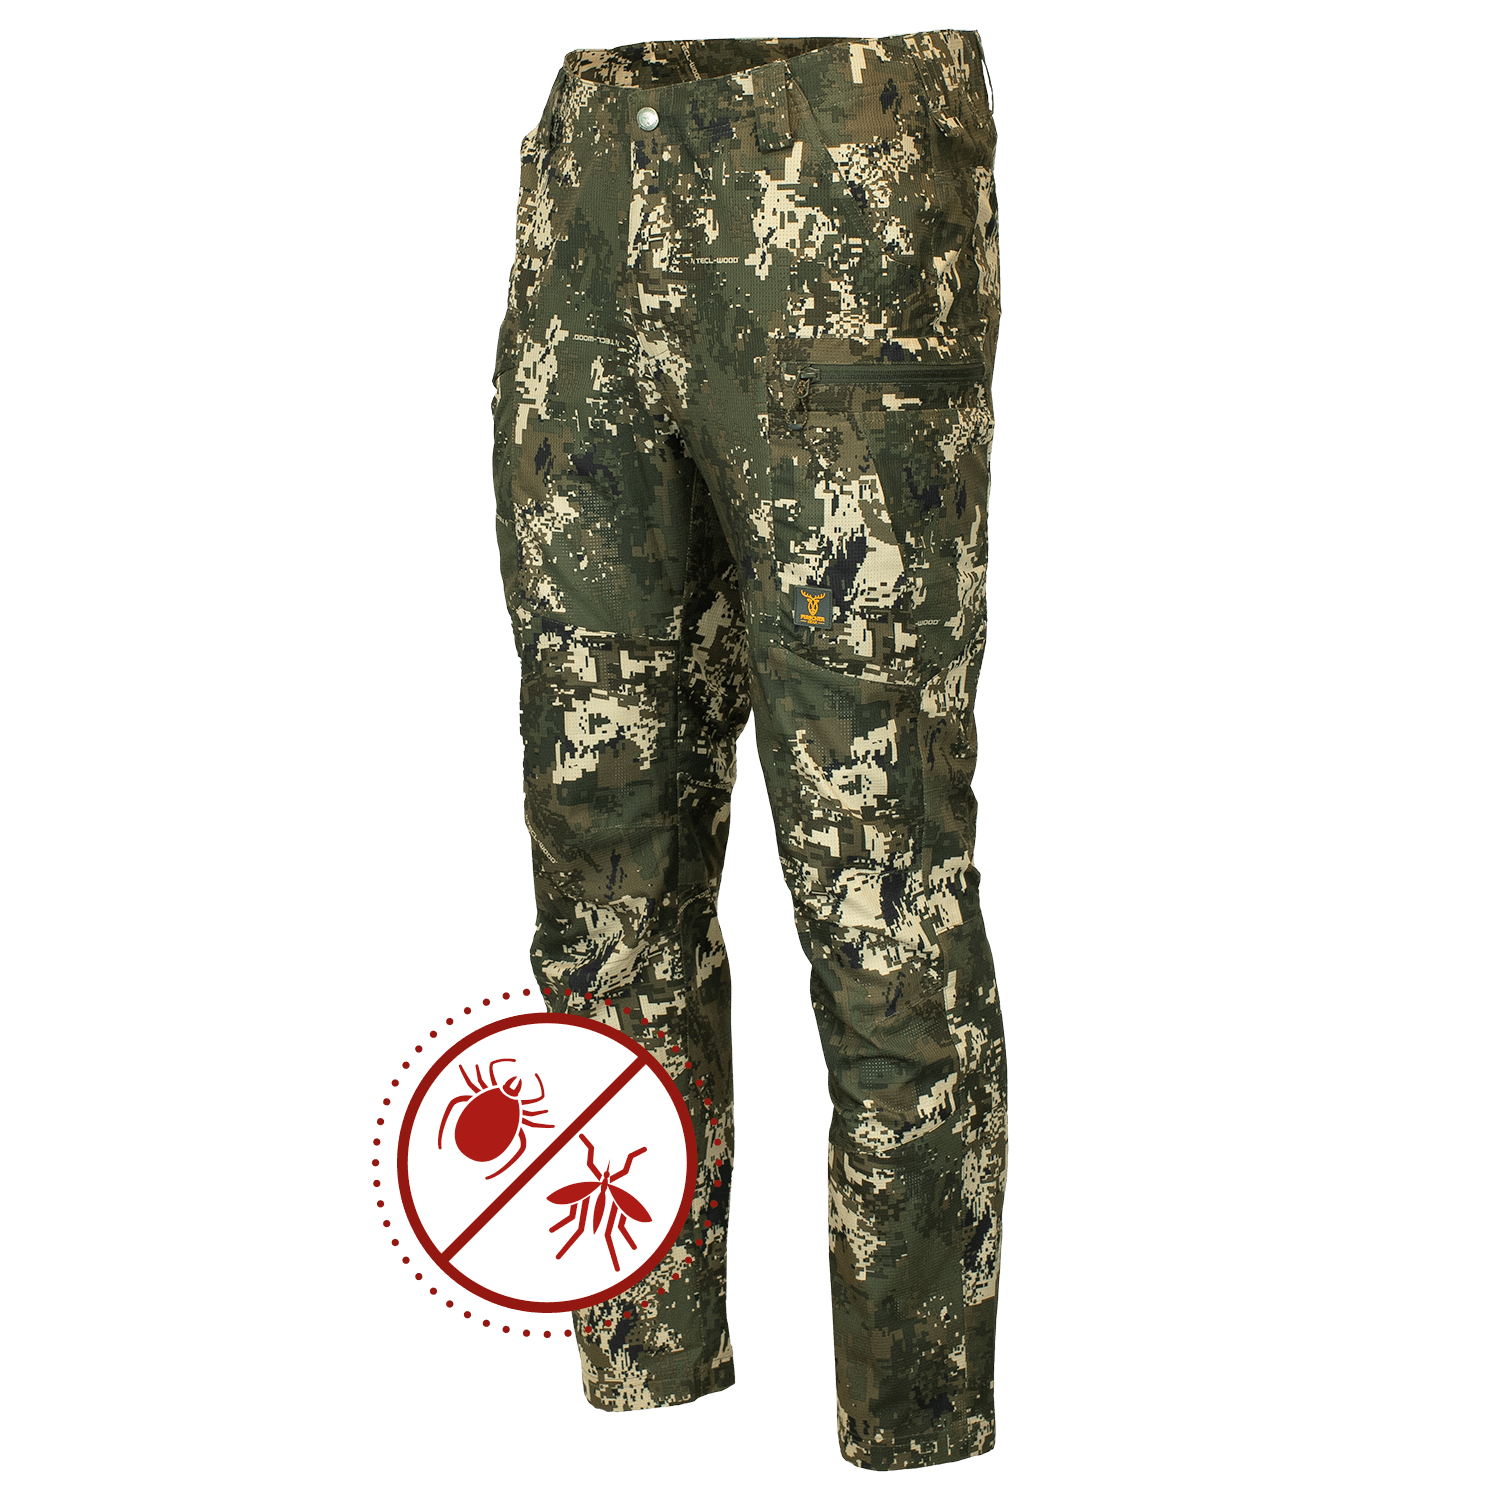 Pirscher Gear Ultralight Tanatex Pants (Optimax) - Men's Hunting Clothing